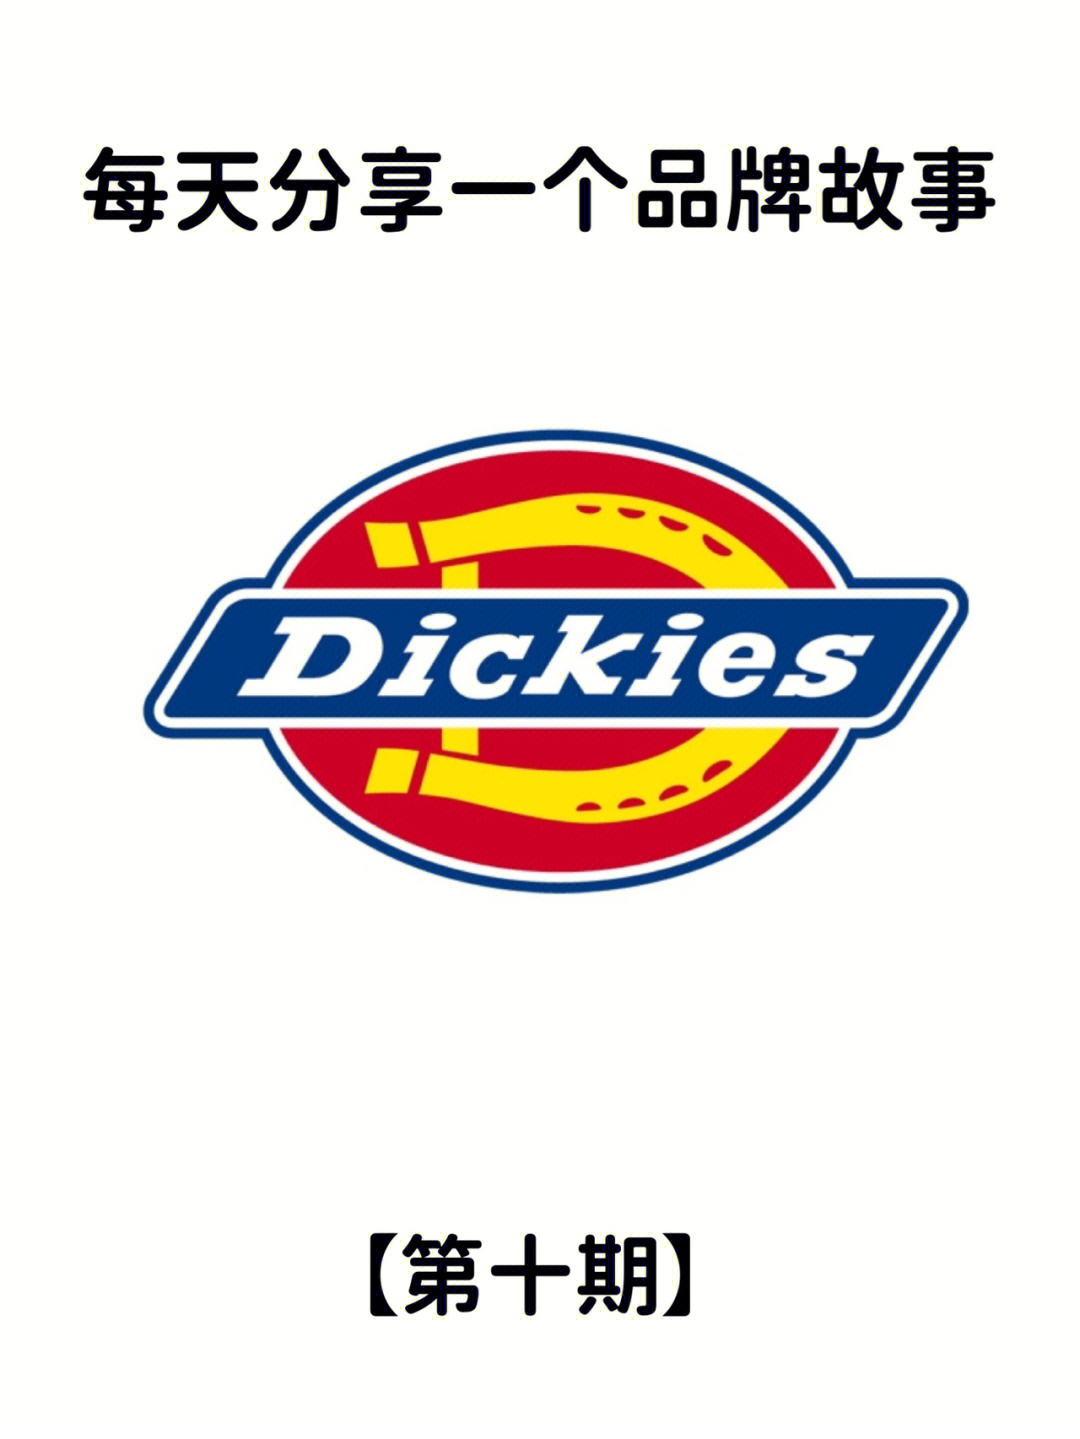 dickies中文叫什么图片